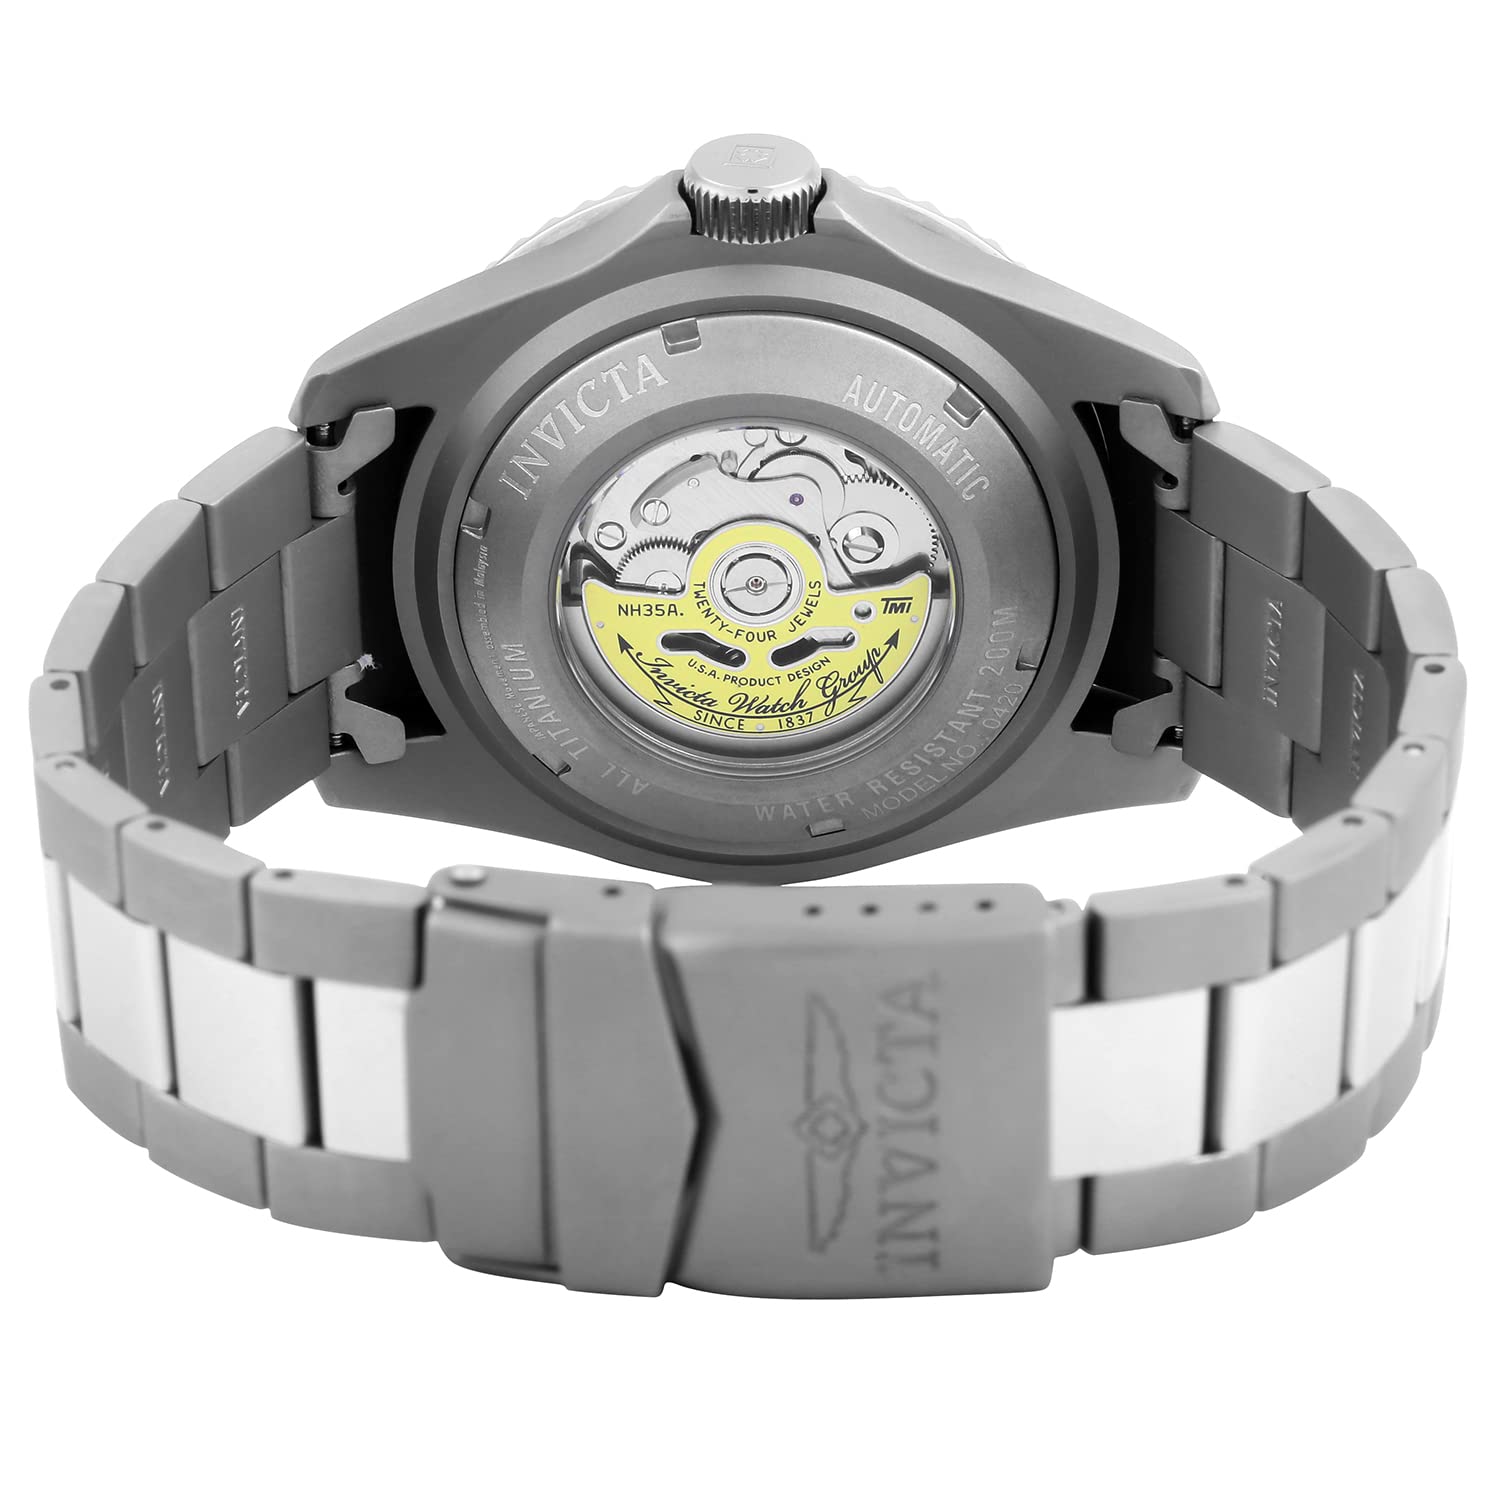 Invicta Men's 0420 Pro Diver Automatic Black Dial Titanium Watch